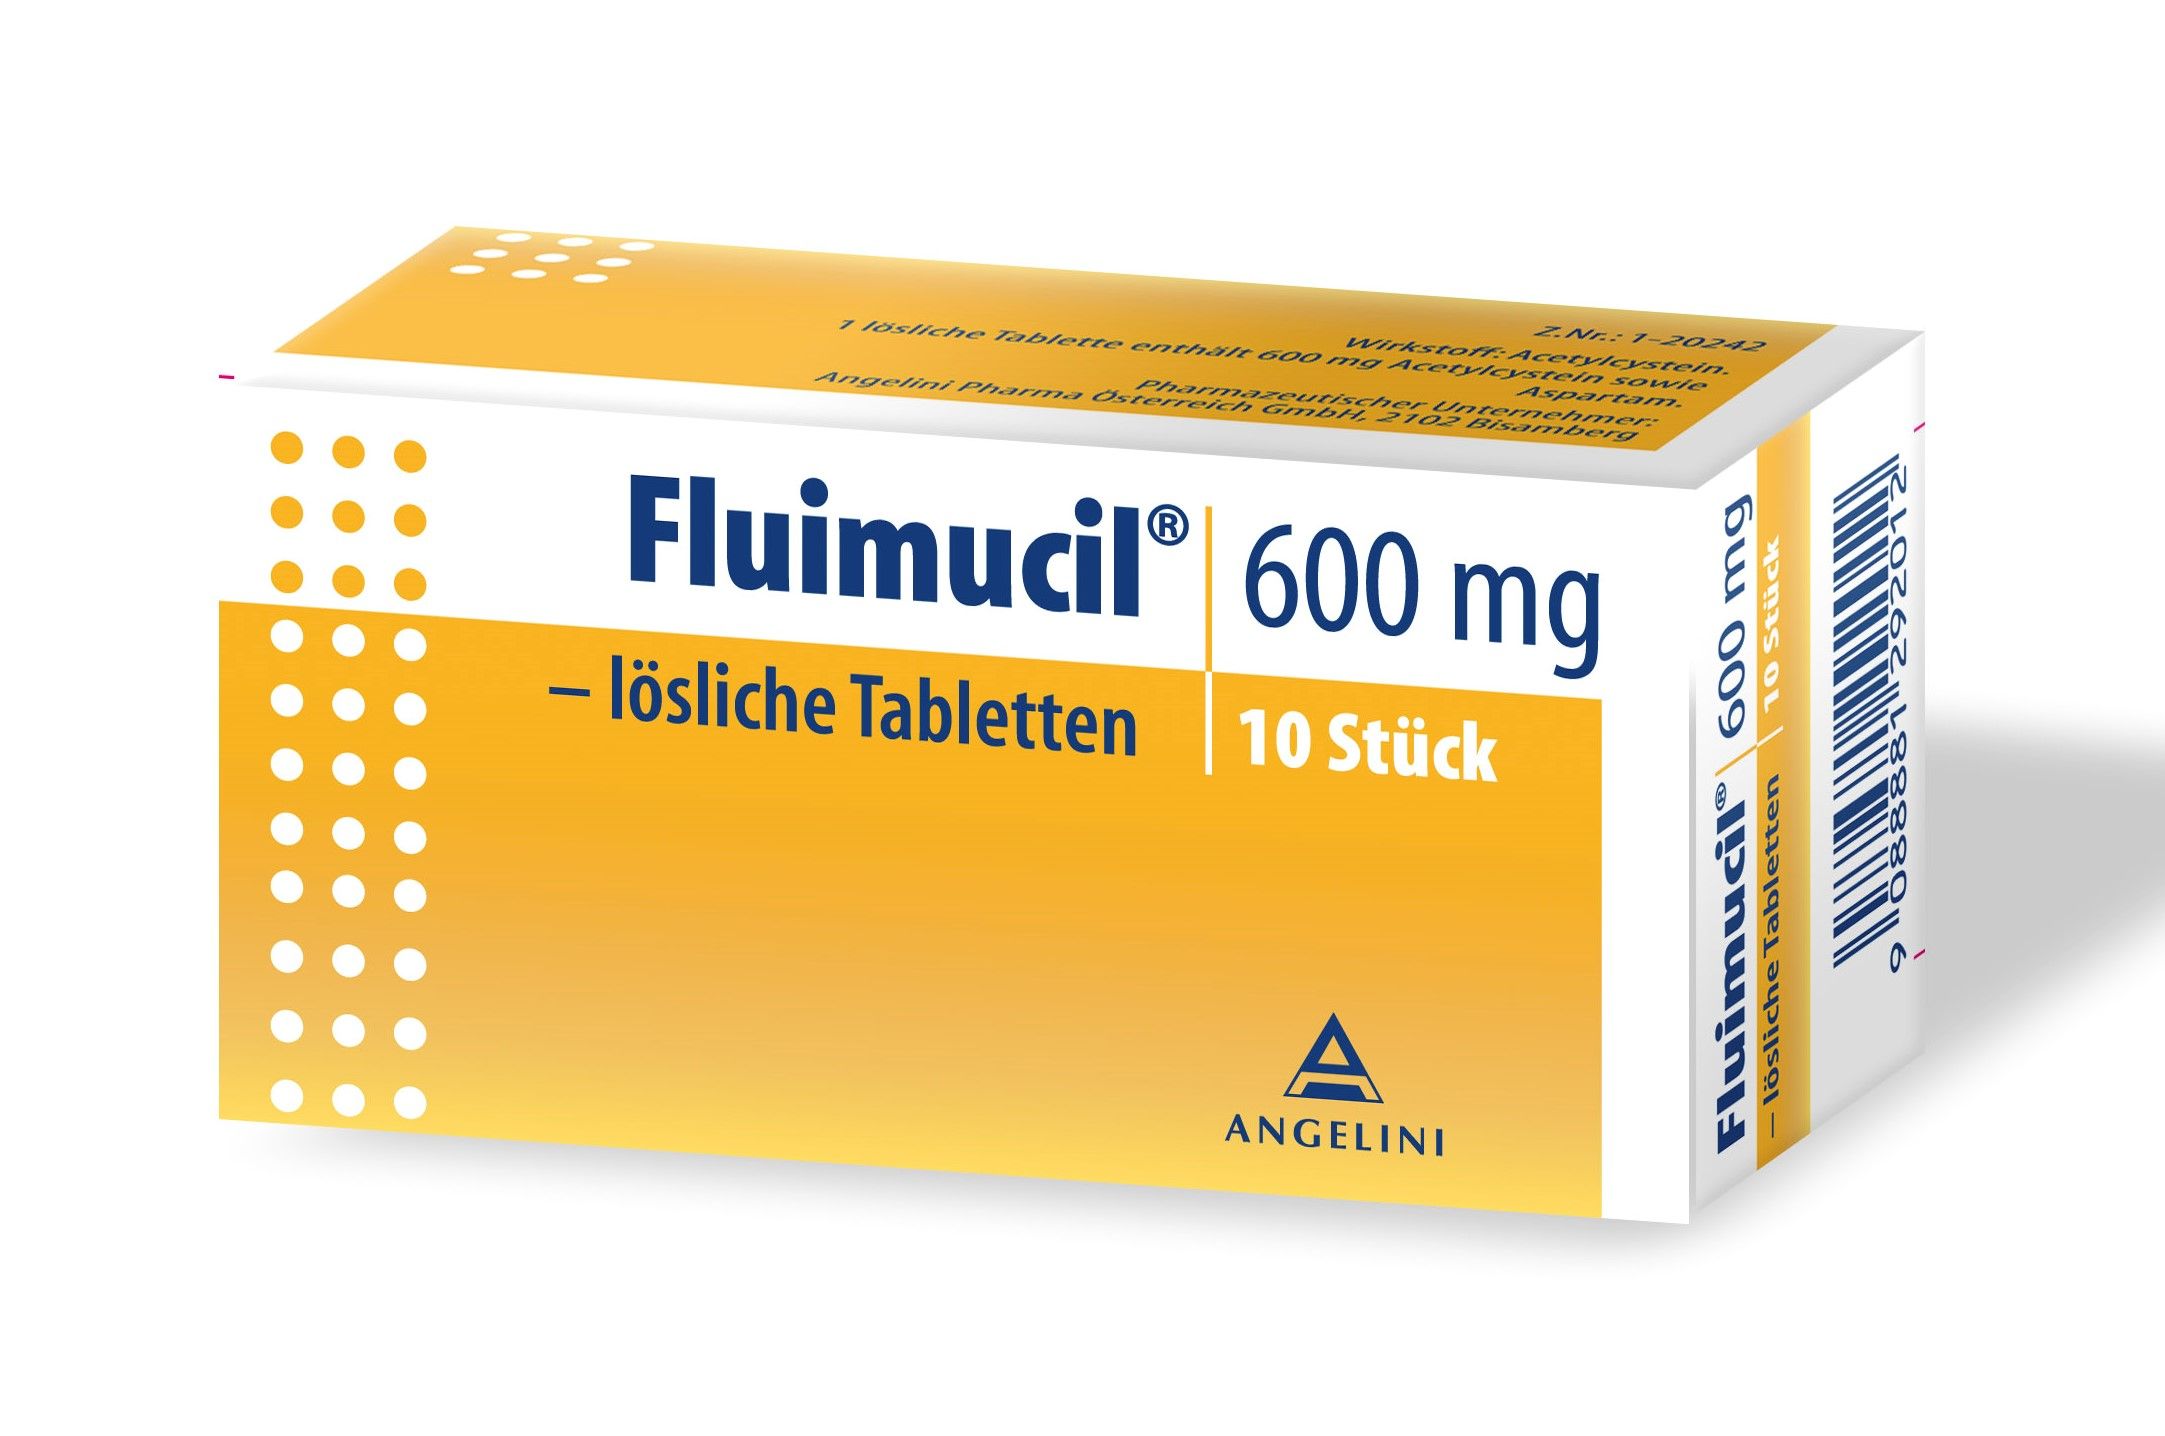 Abbildung Fluimucil 600 mg lösliche Tabletten